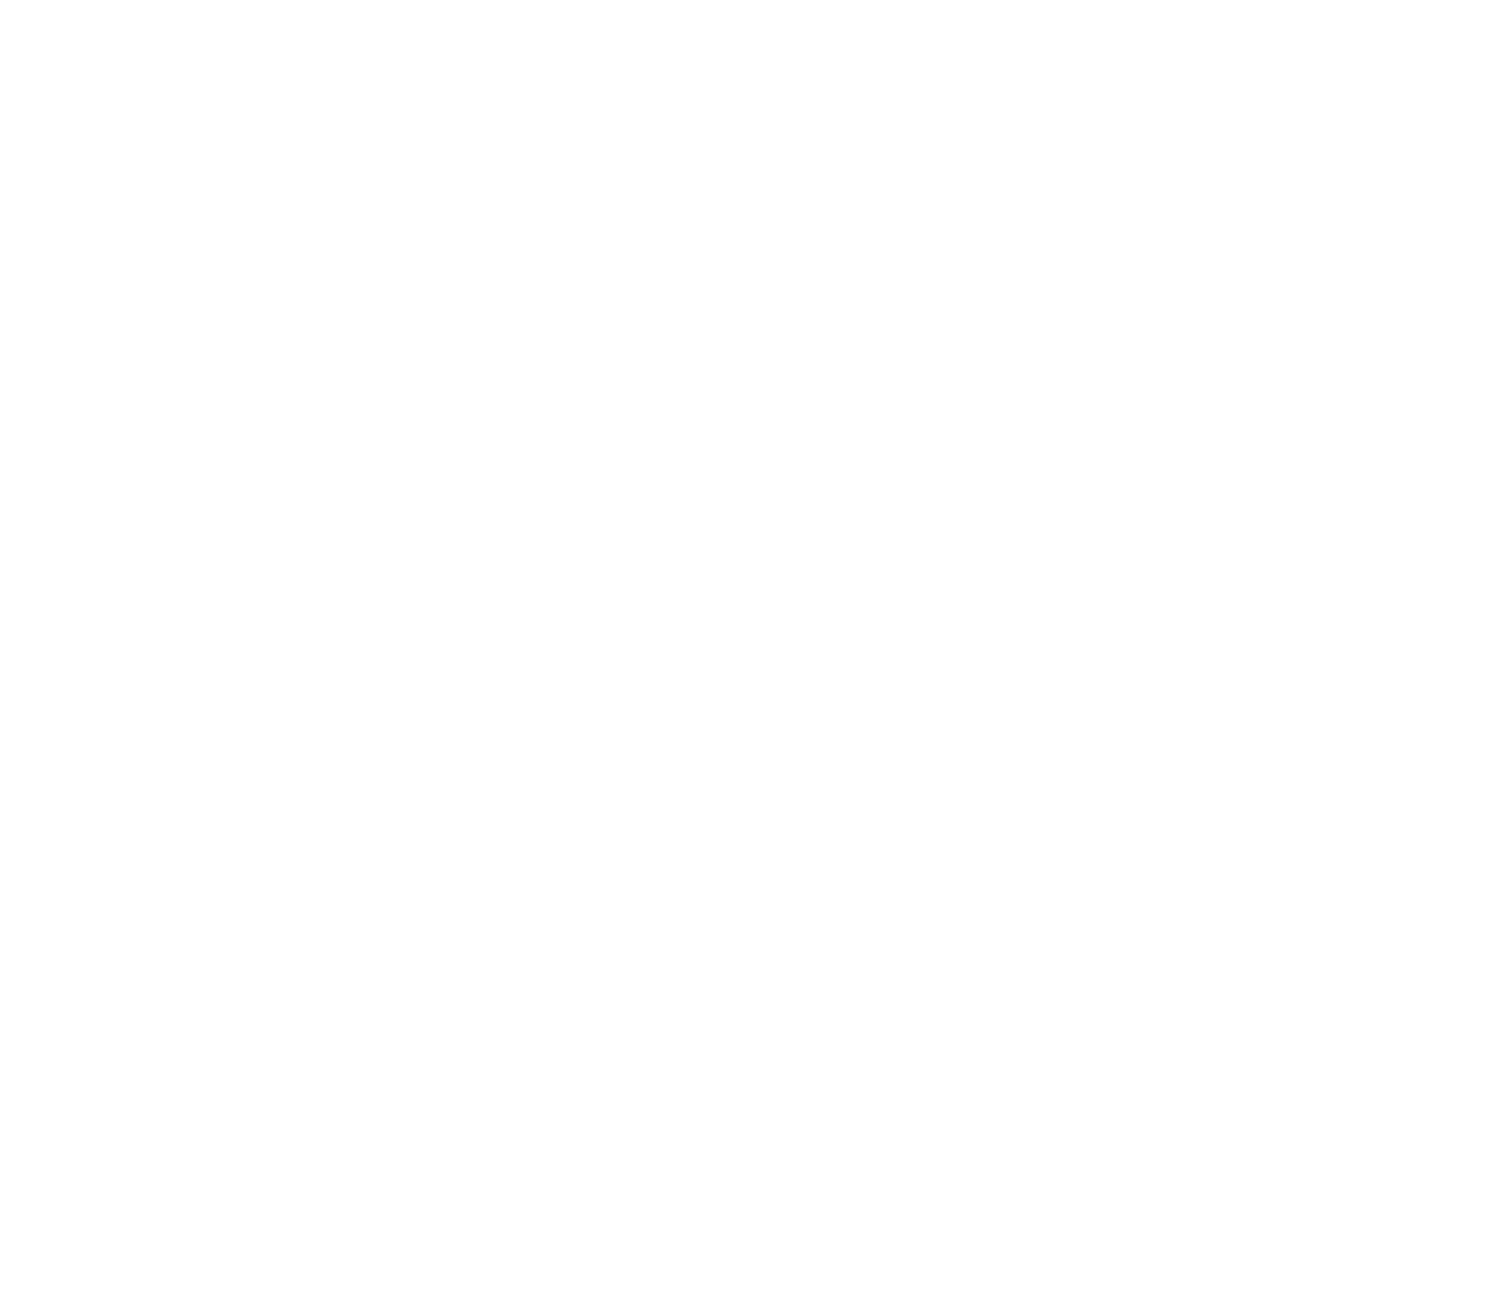 AfroQbano